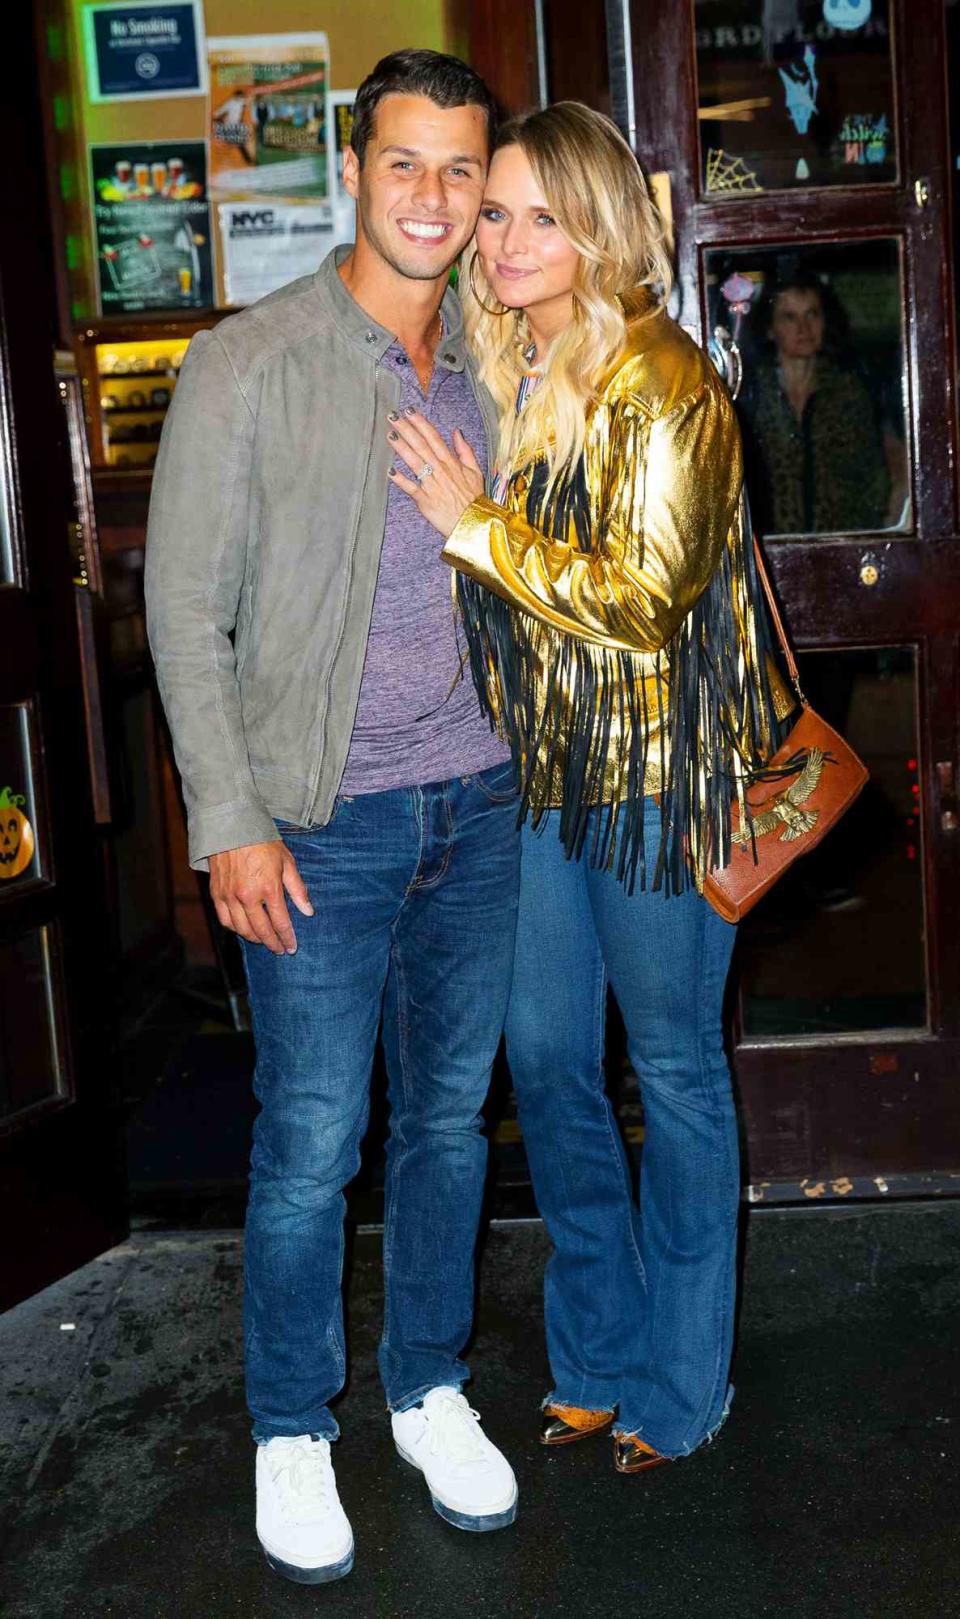 Brendan McLoughlin and Miranda Lambert pose for photos outside a pub on October 30, 2019 in New York City